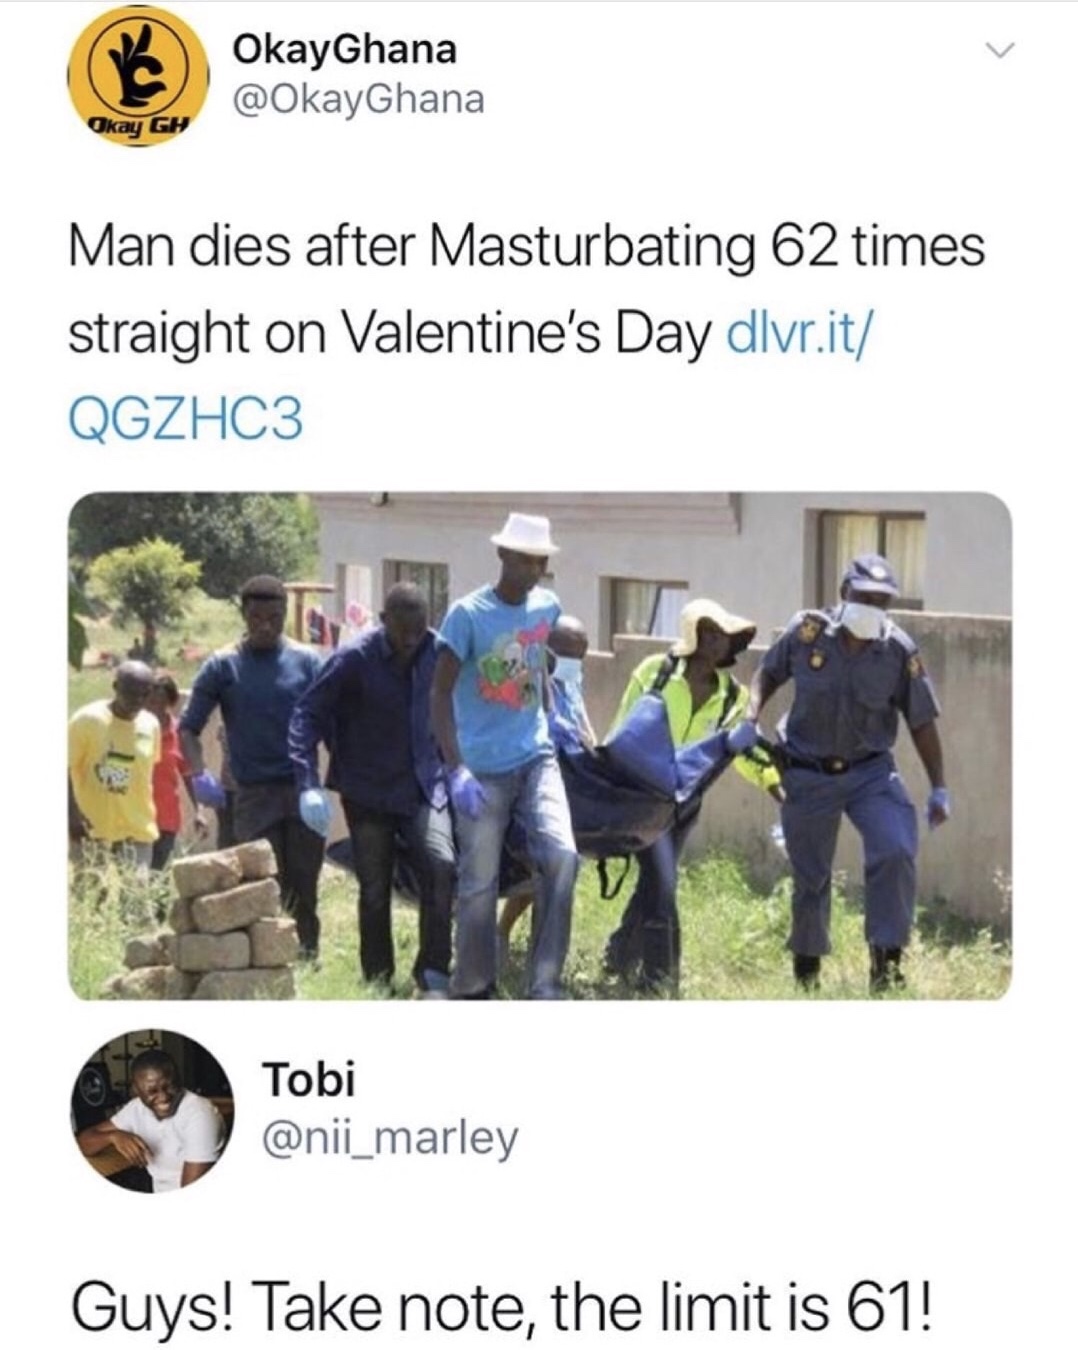 man dies after masturbating 62 times - Okay Ghana Ukay Gh Man dies after Masturbating 62 times straight on Valentine's Day dlvr.it QGZHC3 Tobi Guys! Take note, the limit is 61!